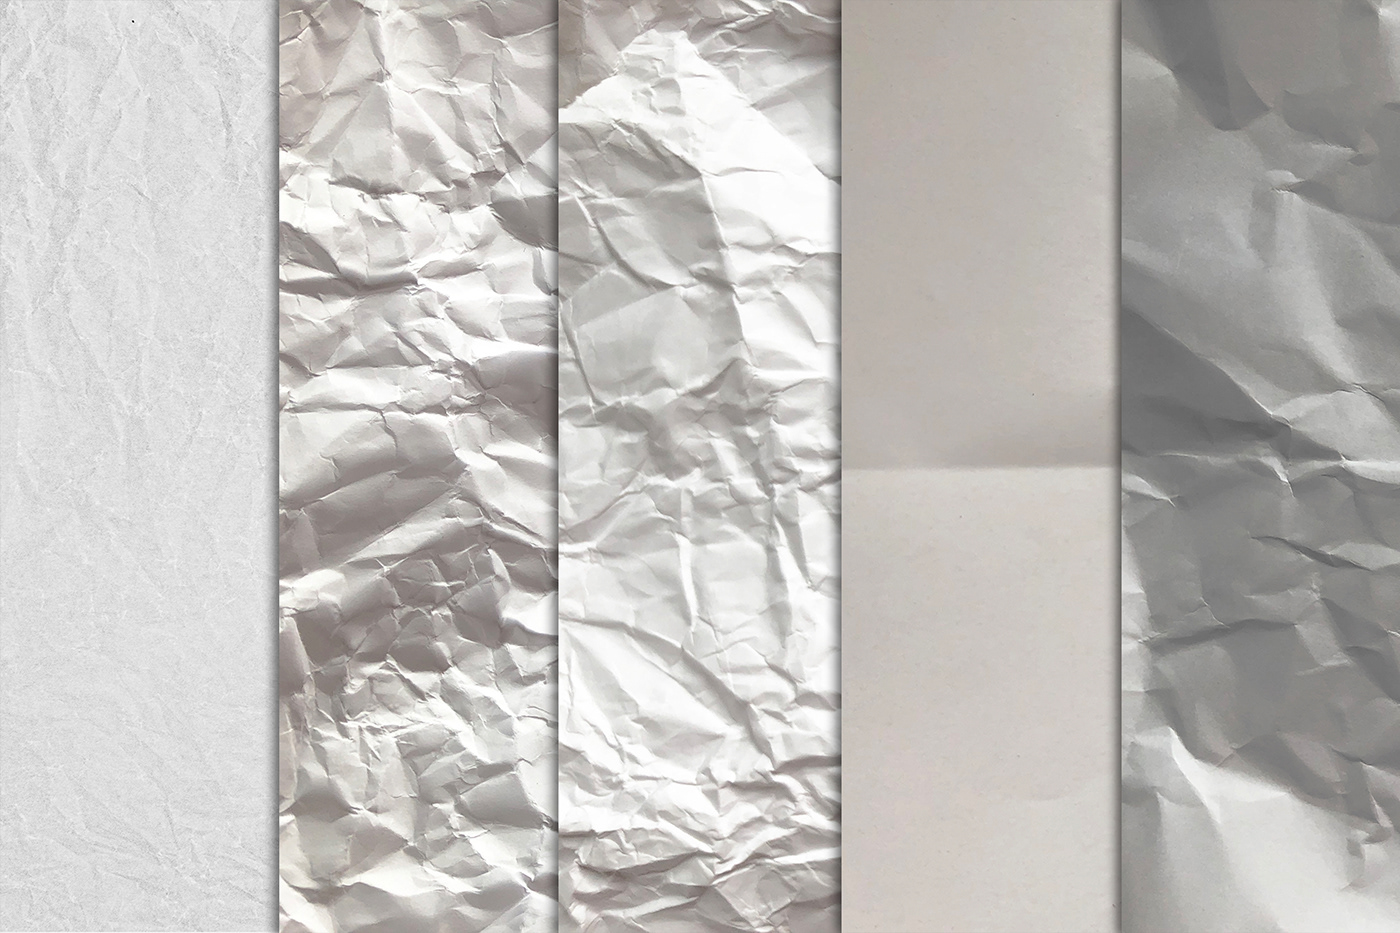 crumpled paper texure background sketch photo scene Pack bundle pattern